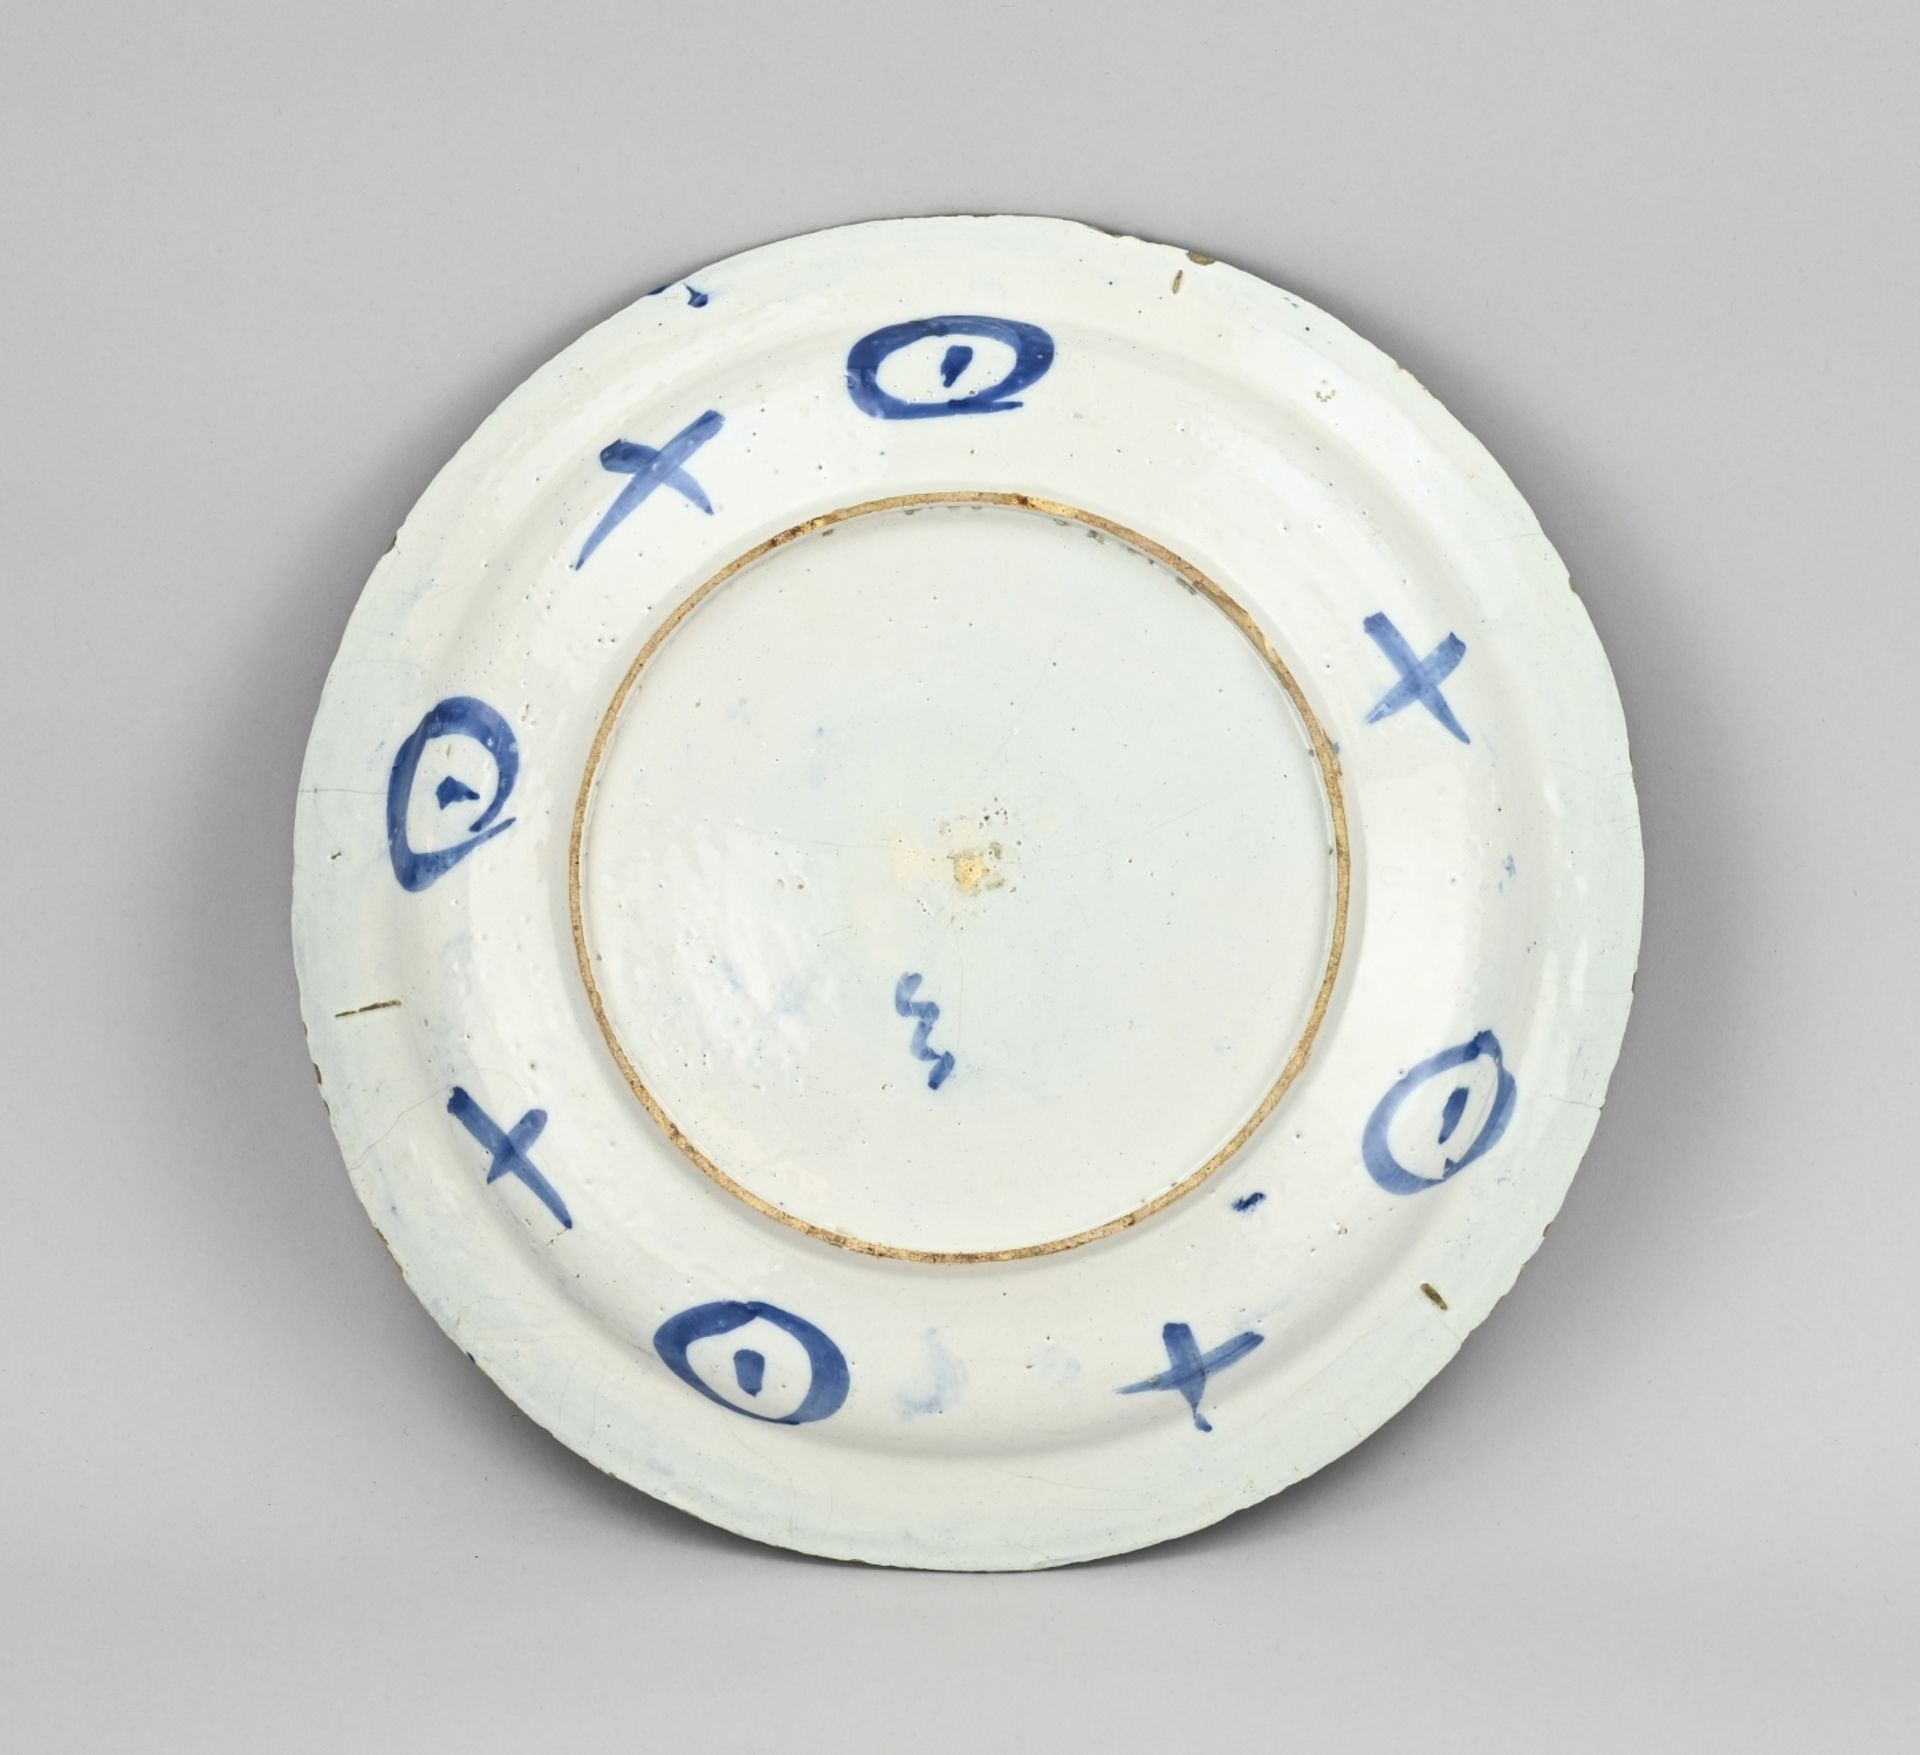 Delft dish Ã˜ 34.2 cm. - Image 2 of 2